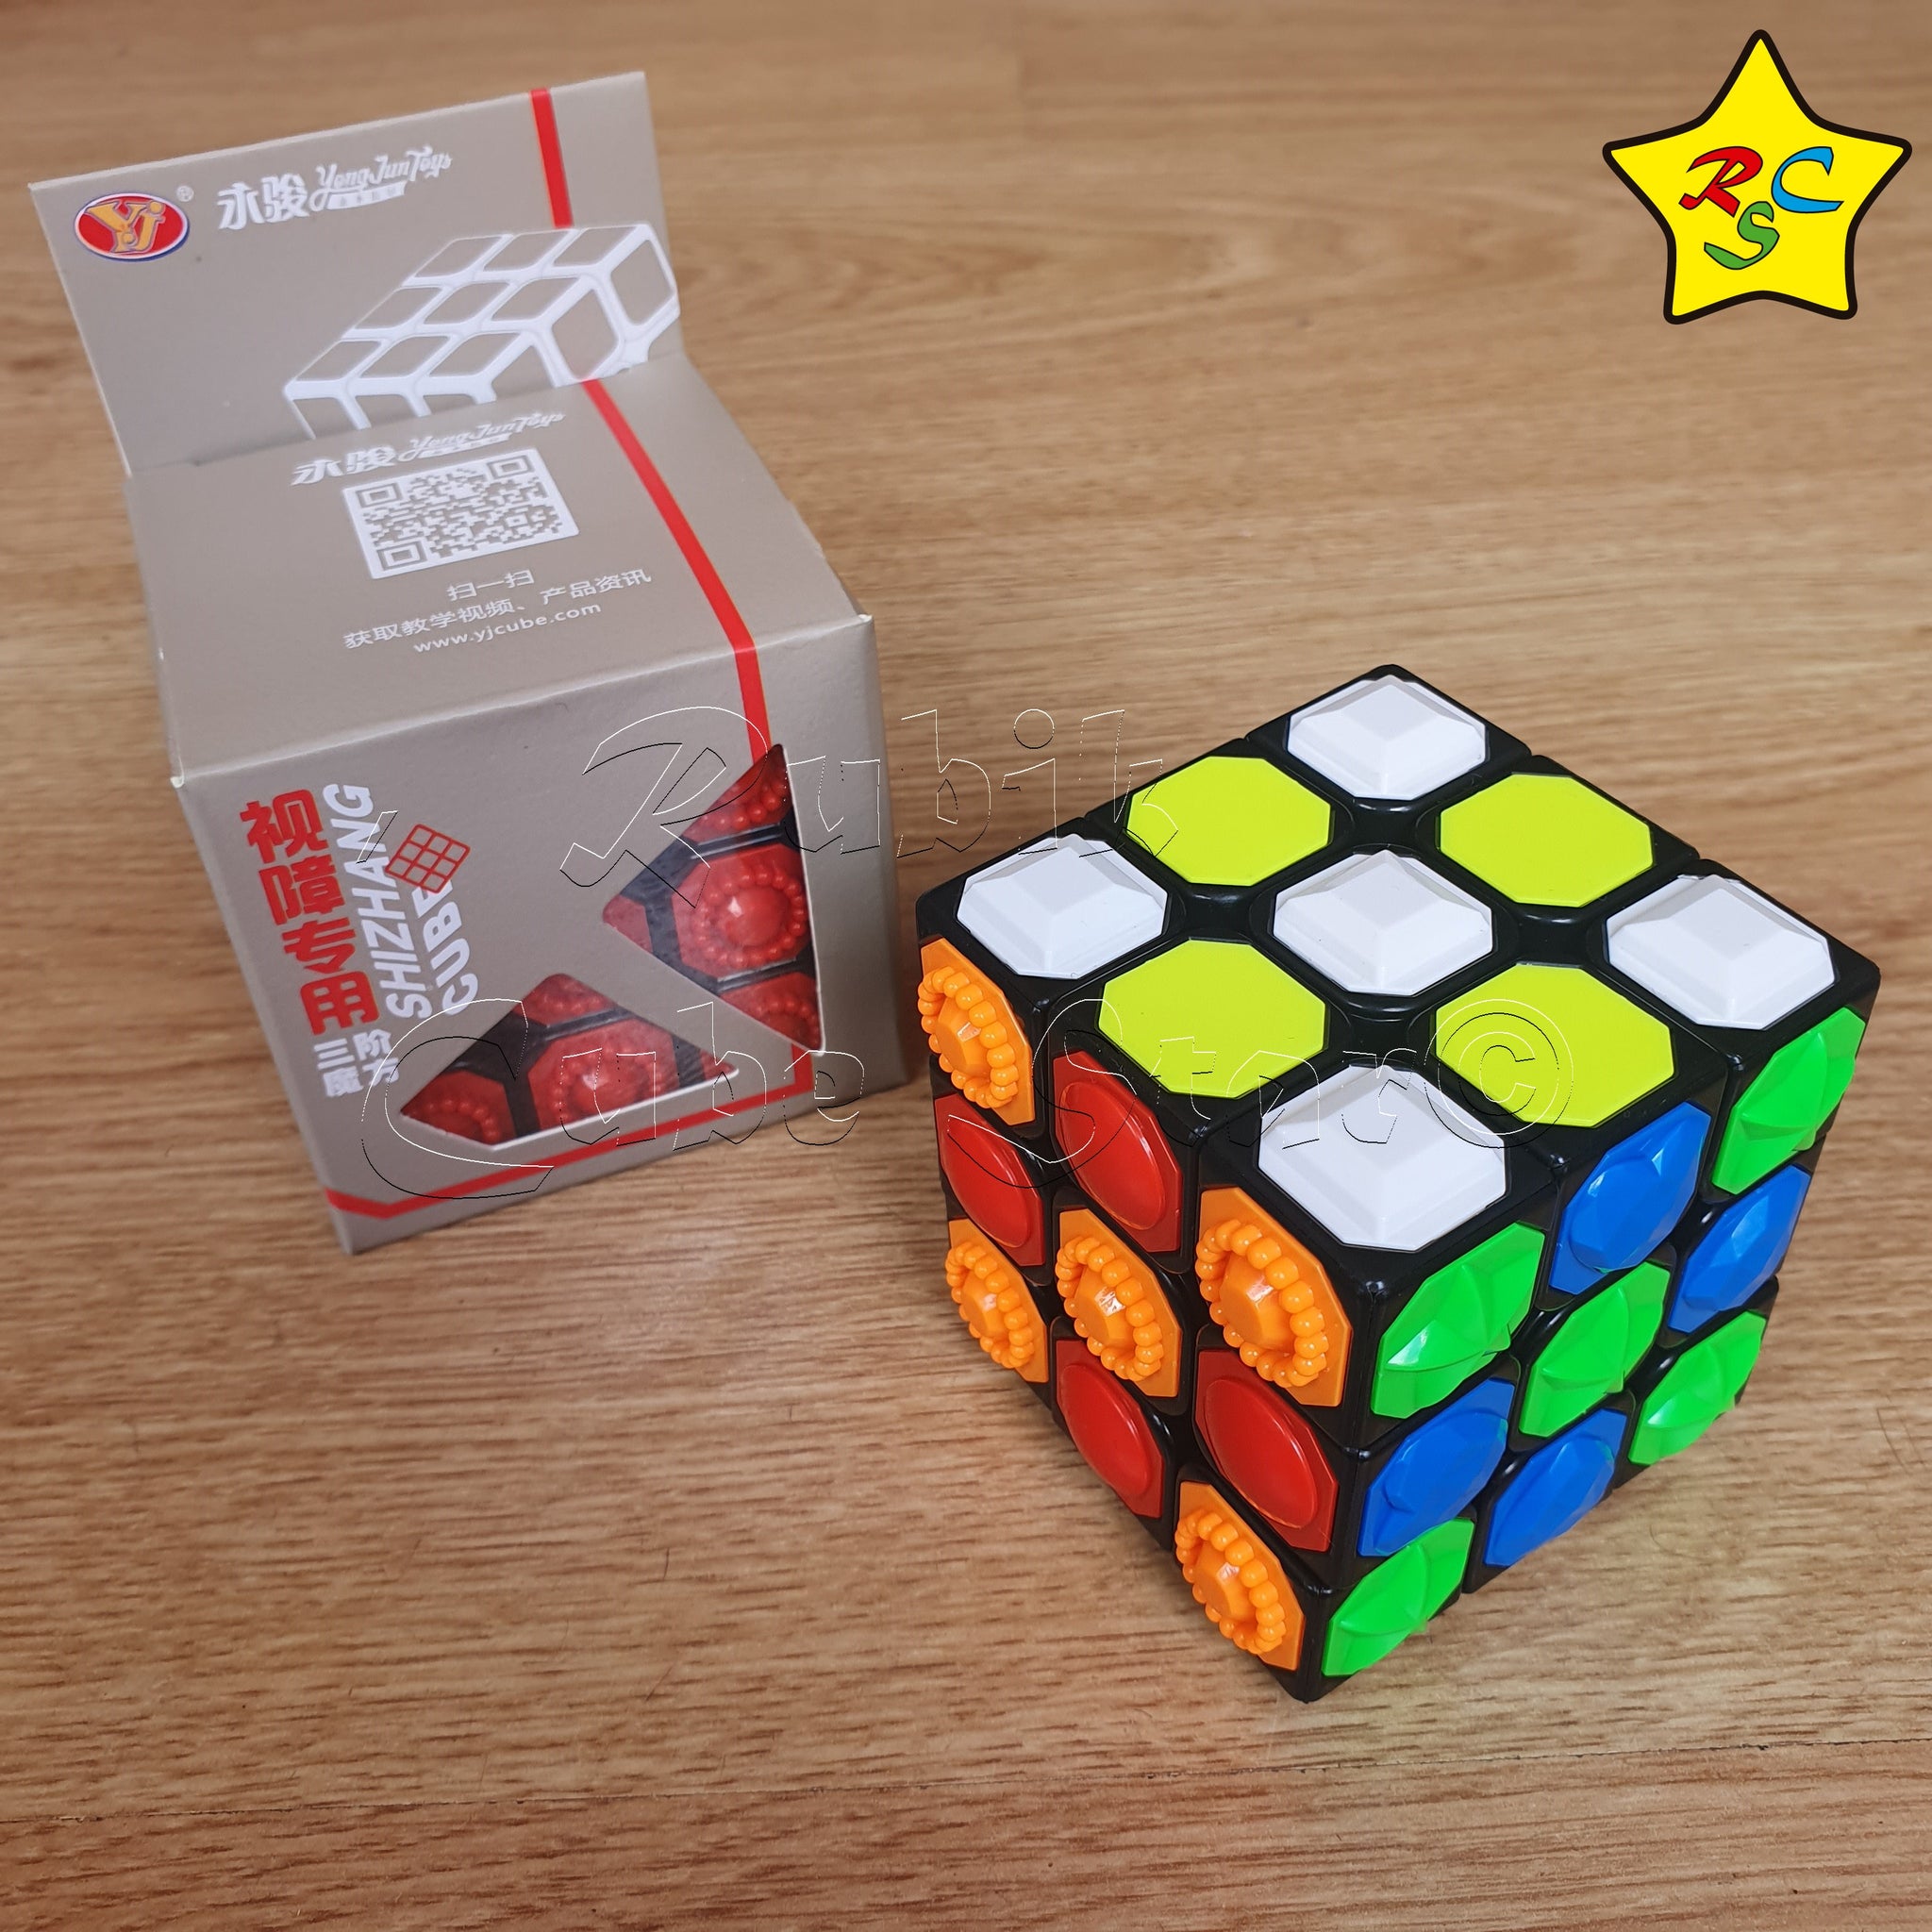 Fotos De Cubos De Rubik Cubo Rubik 3x3 Blind Yj Textura Formas Tacto Reto A Ciegas – Rubik Cube Star